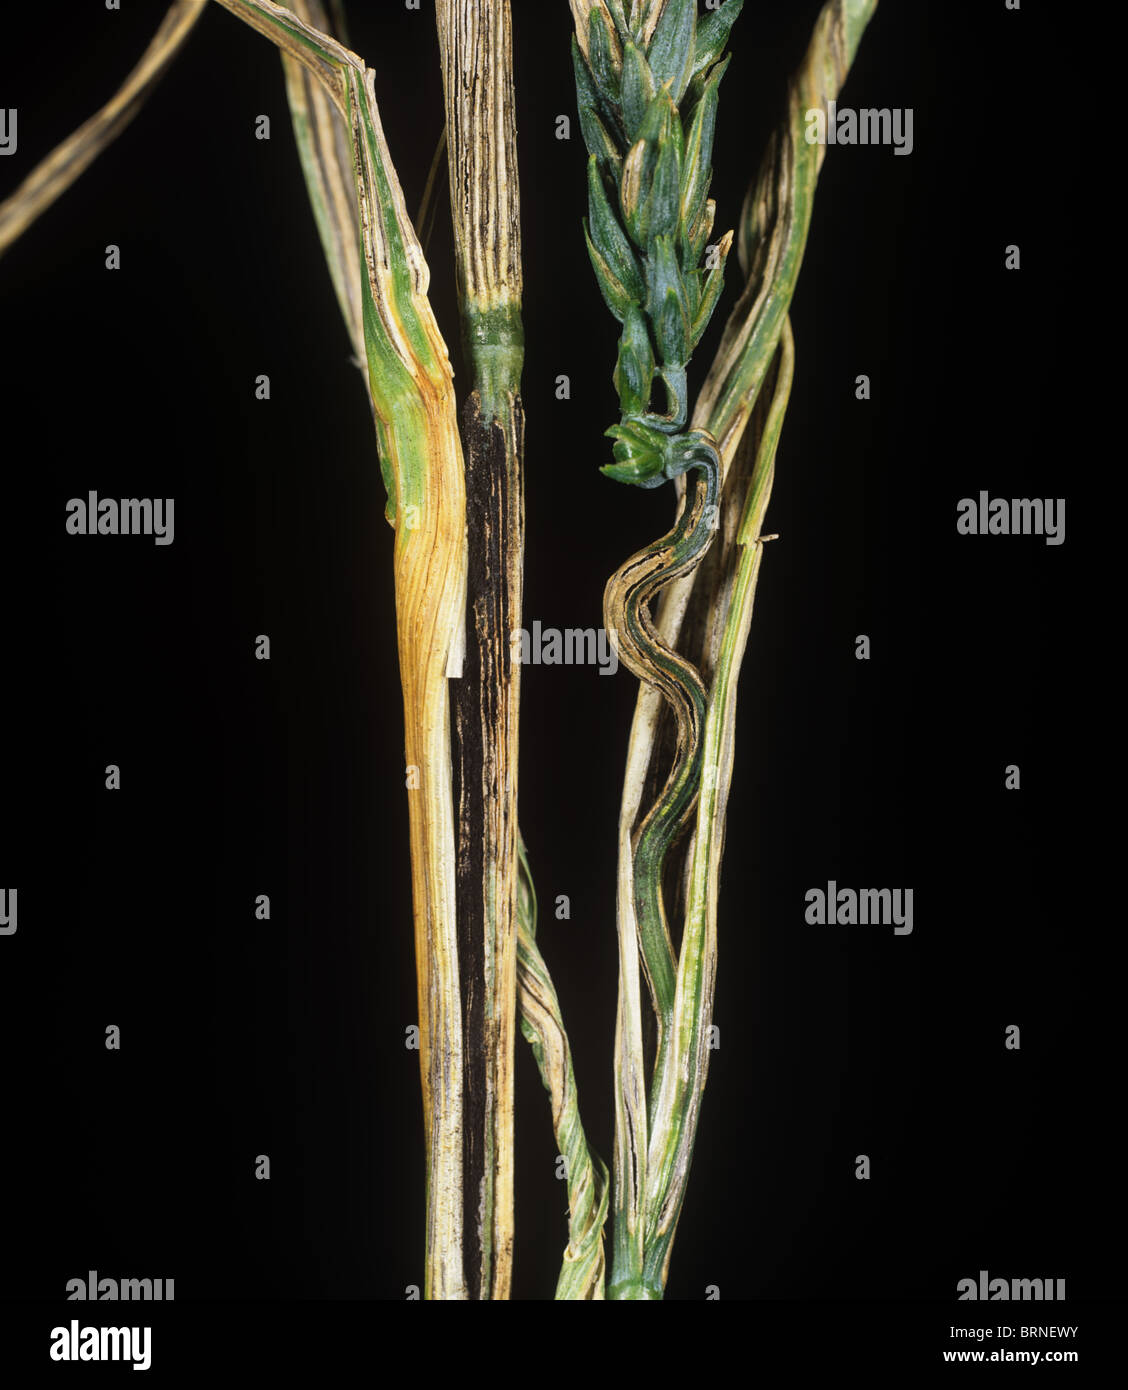 Flag smut (Urocystis agropyri) on wheat crop flag leaf, USA Stock Photo